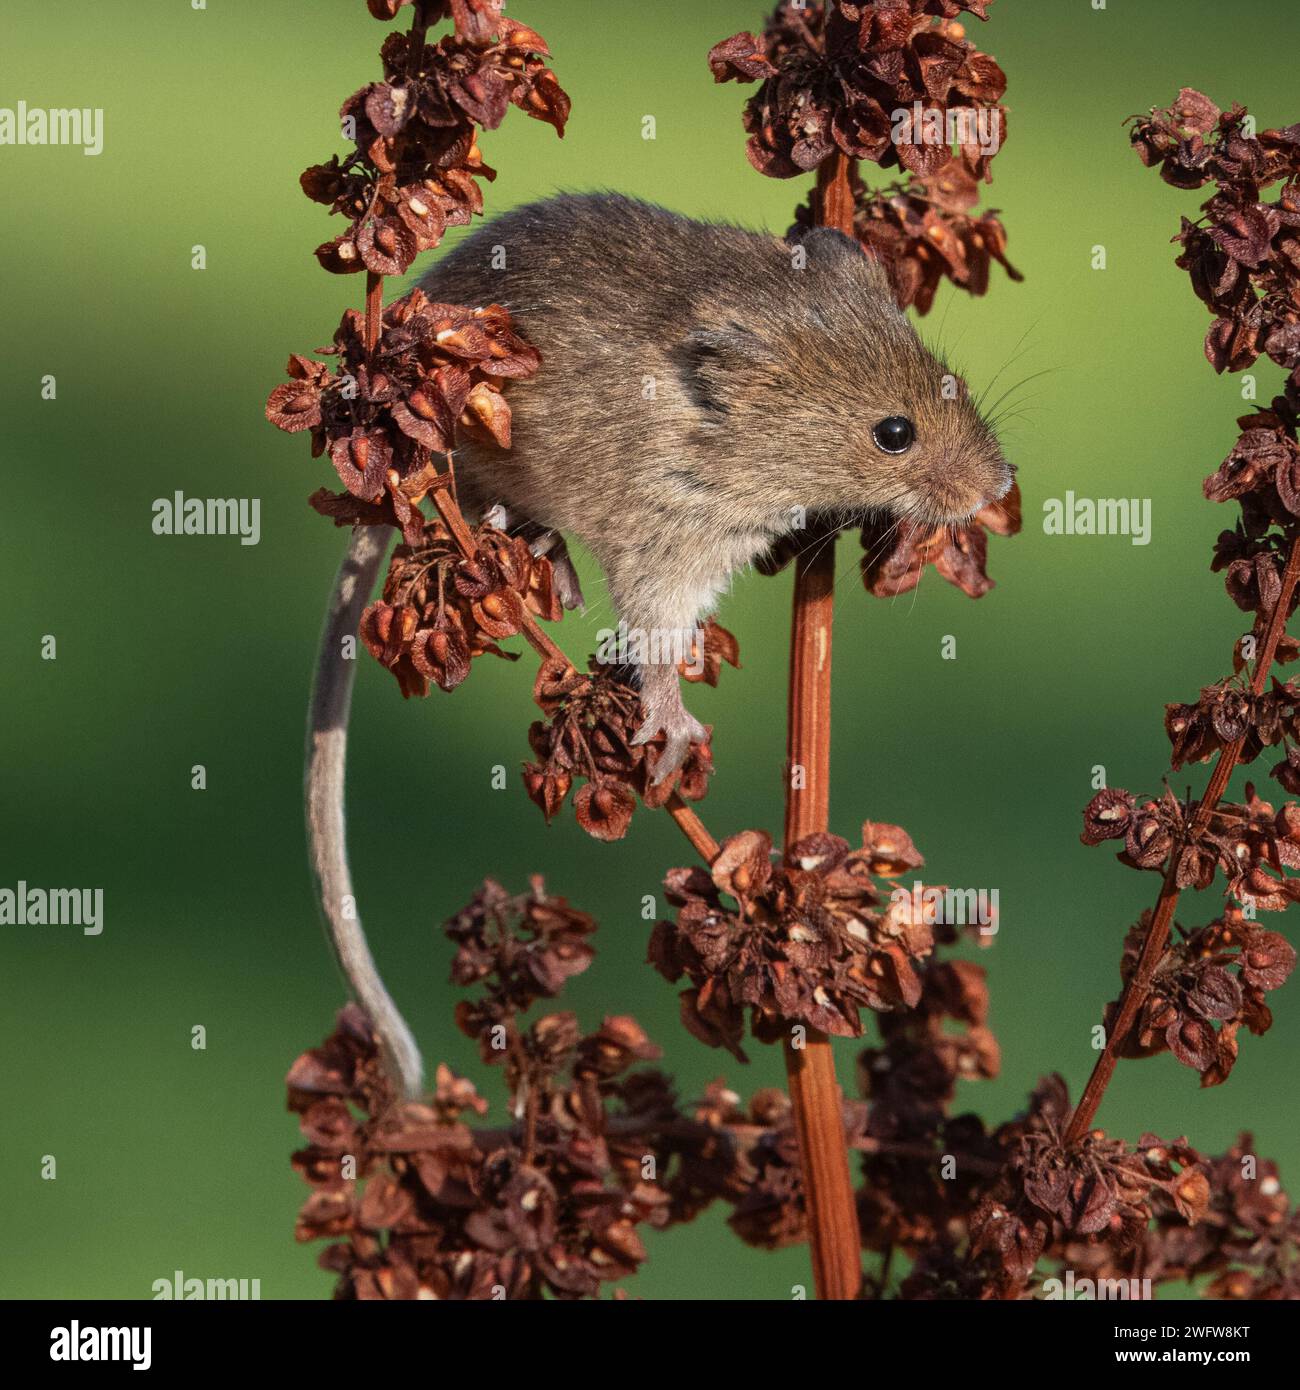 Harvest mouse (Micromys minutus) Climbing Stock Photo